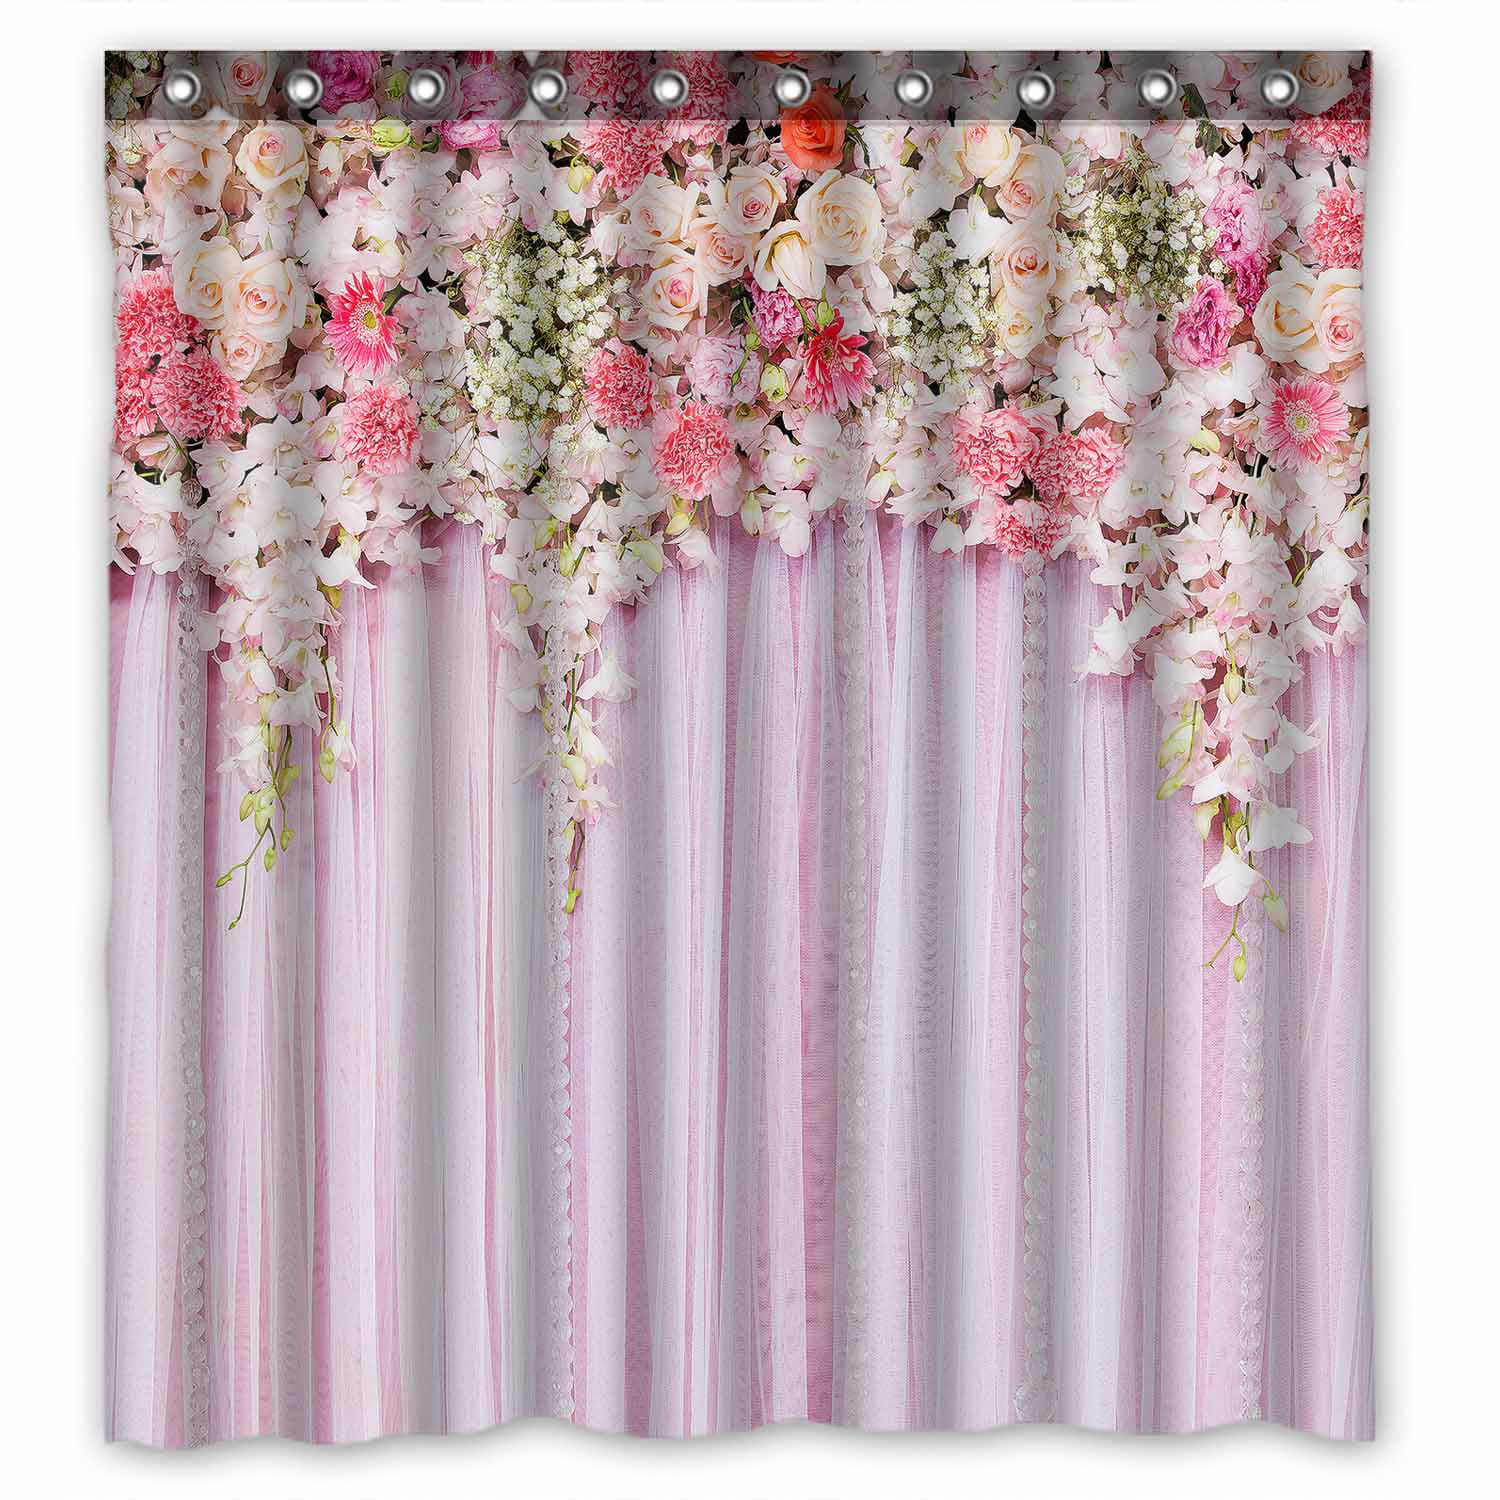 Sunrise Lavender Mountain Scenery Waterproof Fabric Shower Curtain Set 60X72" 